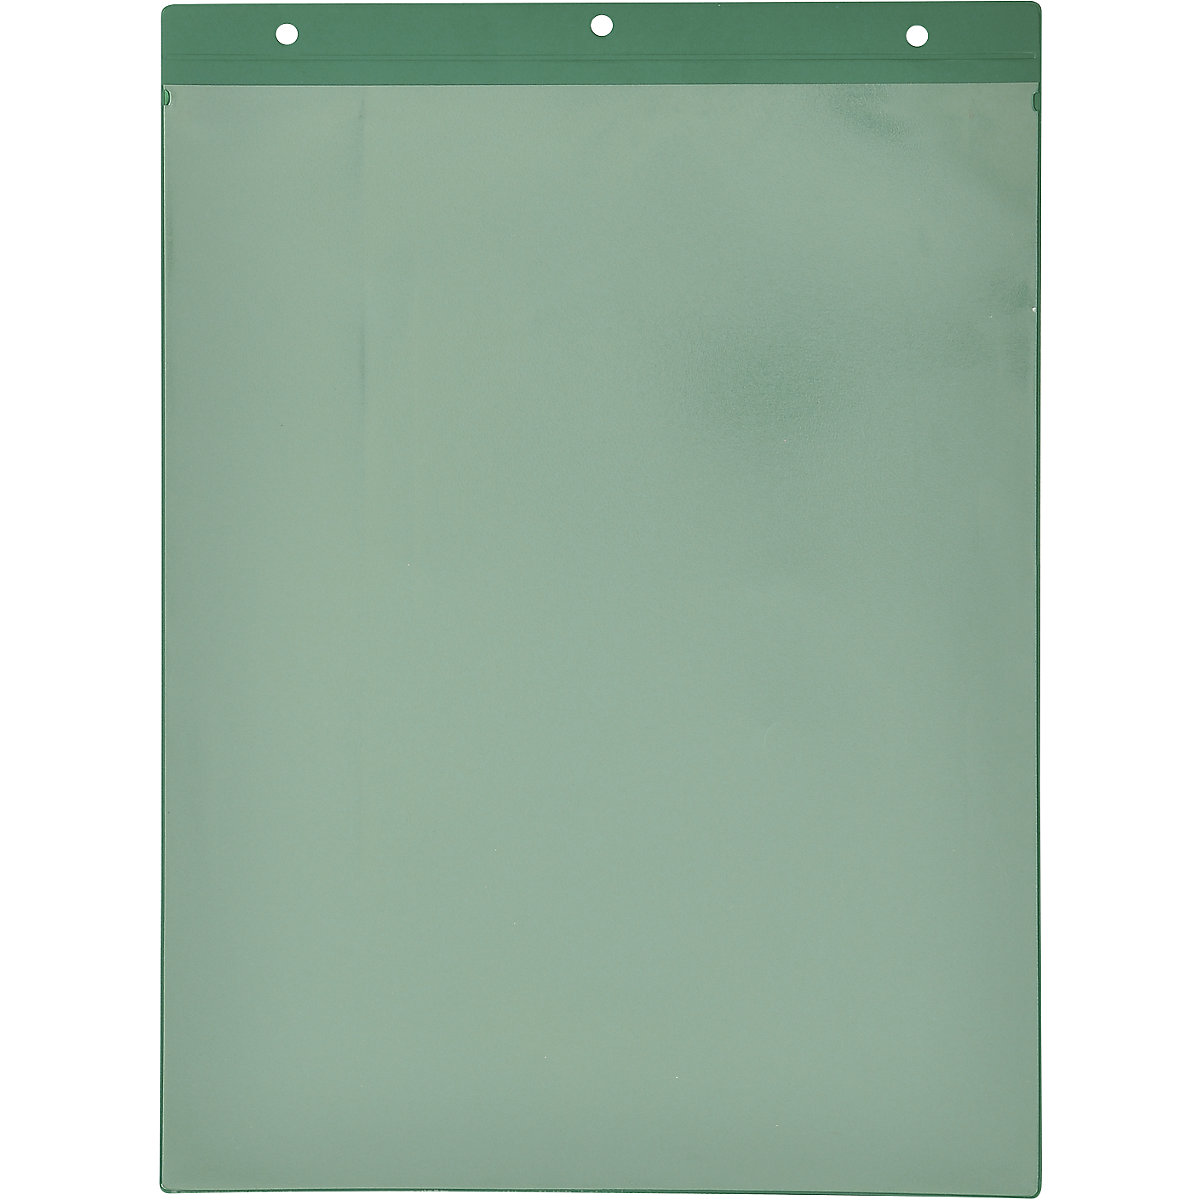 Beschriftungstaschen mit Aufhängelochung, Hochformat DIN A4, grün, VE 50 Stk